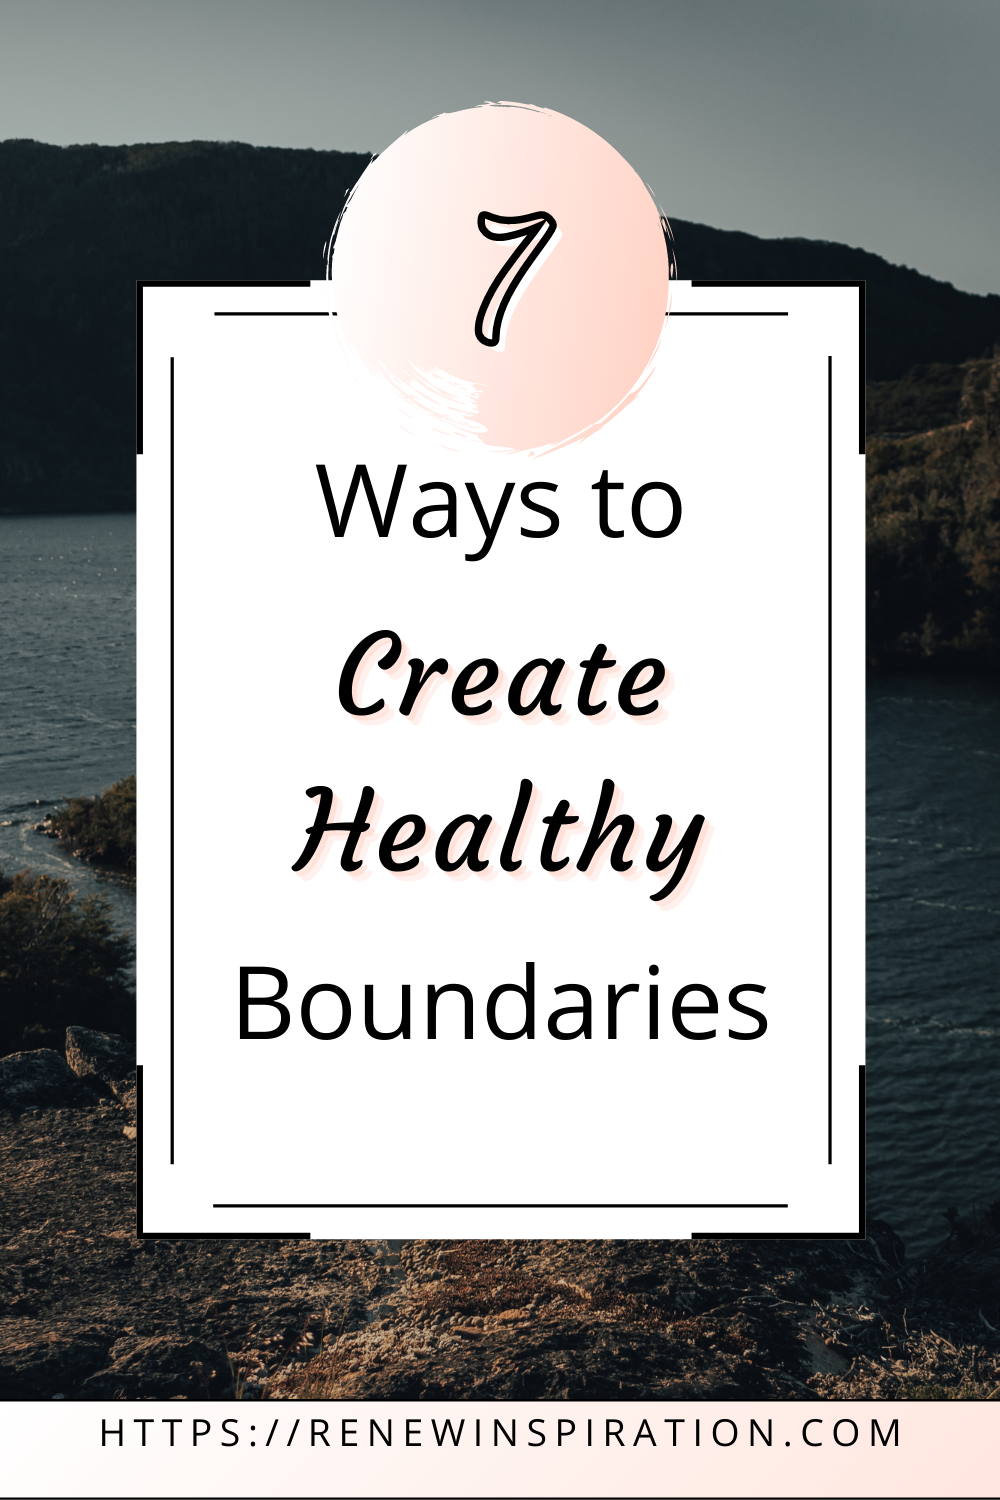 Renew Inspiration, 7 Ways To Create Healthy Boundaries